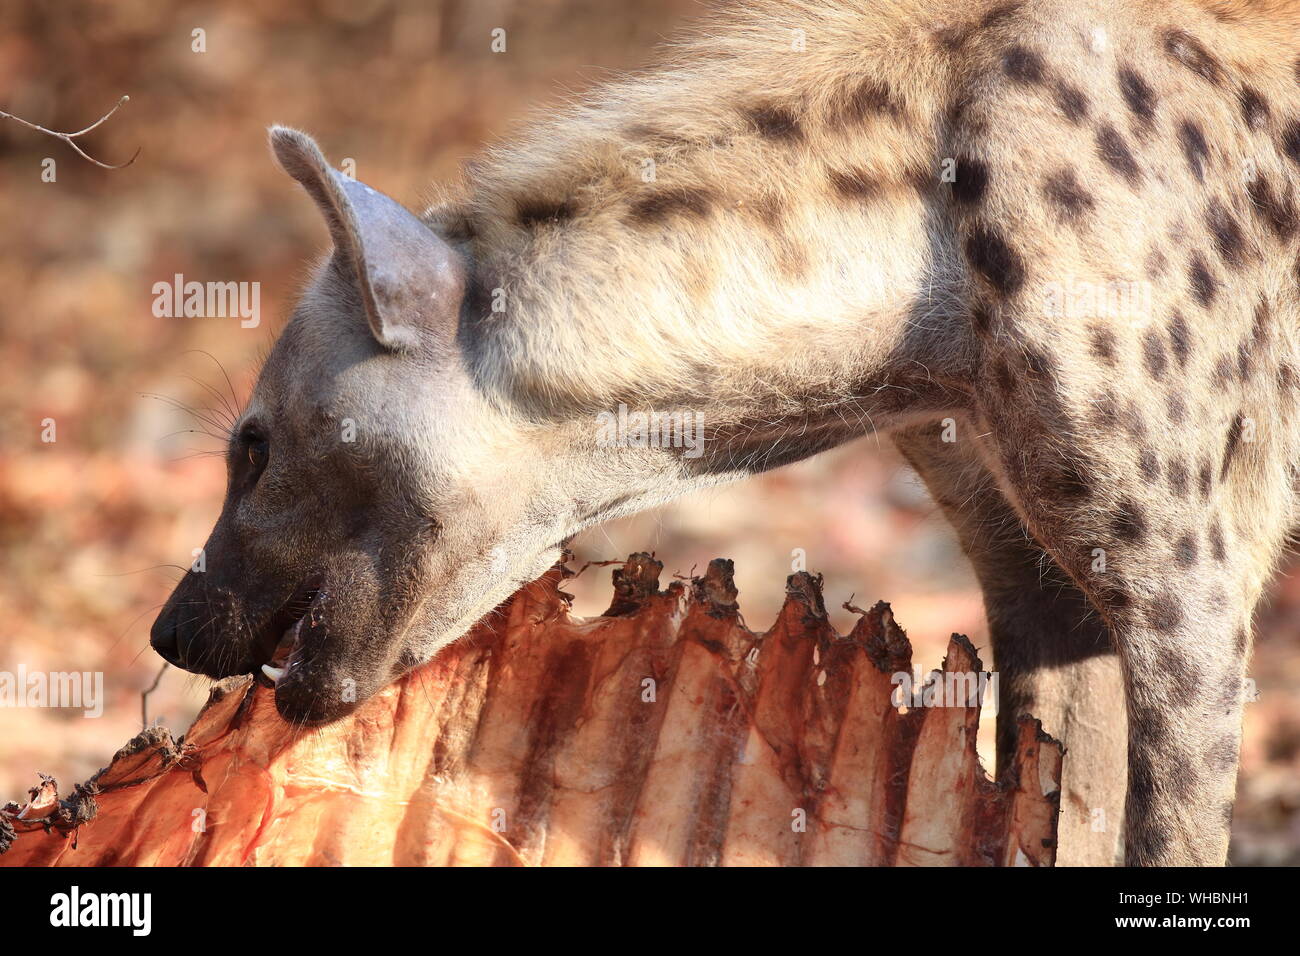 Hyena Eating Dead Animal On Sunny Day Stock Photo - Alamy